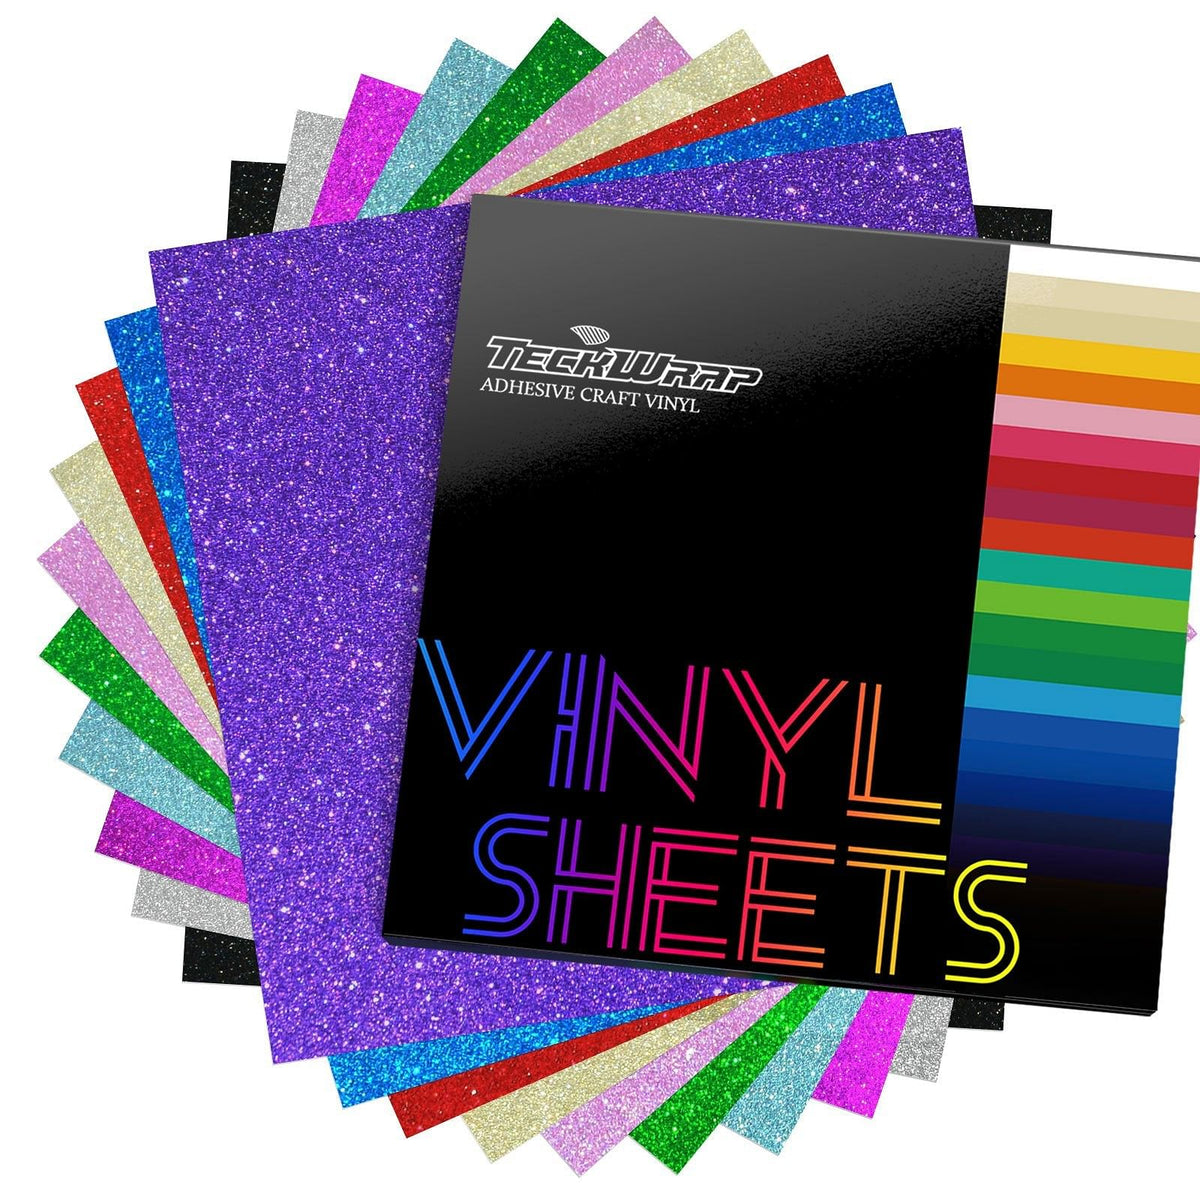 TECKWRAP Permanent Adhesive Vinyl Sheets 30 x 30 cm - 40 Sheets